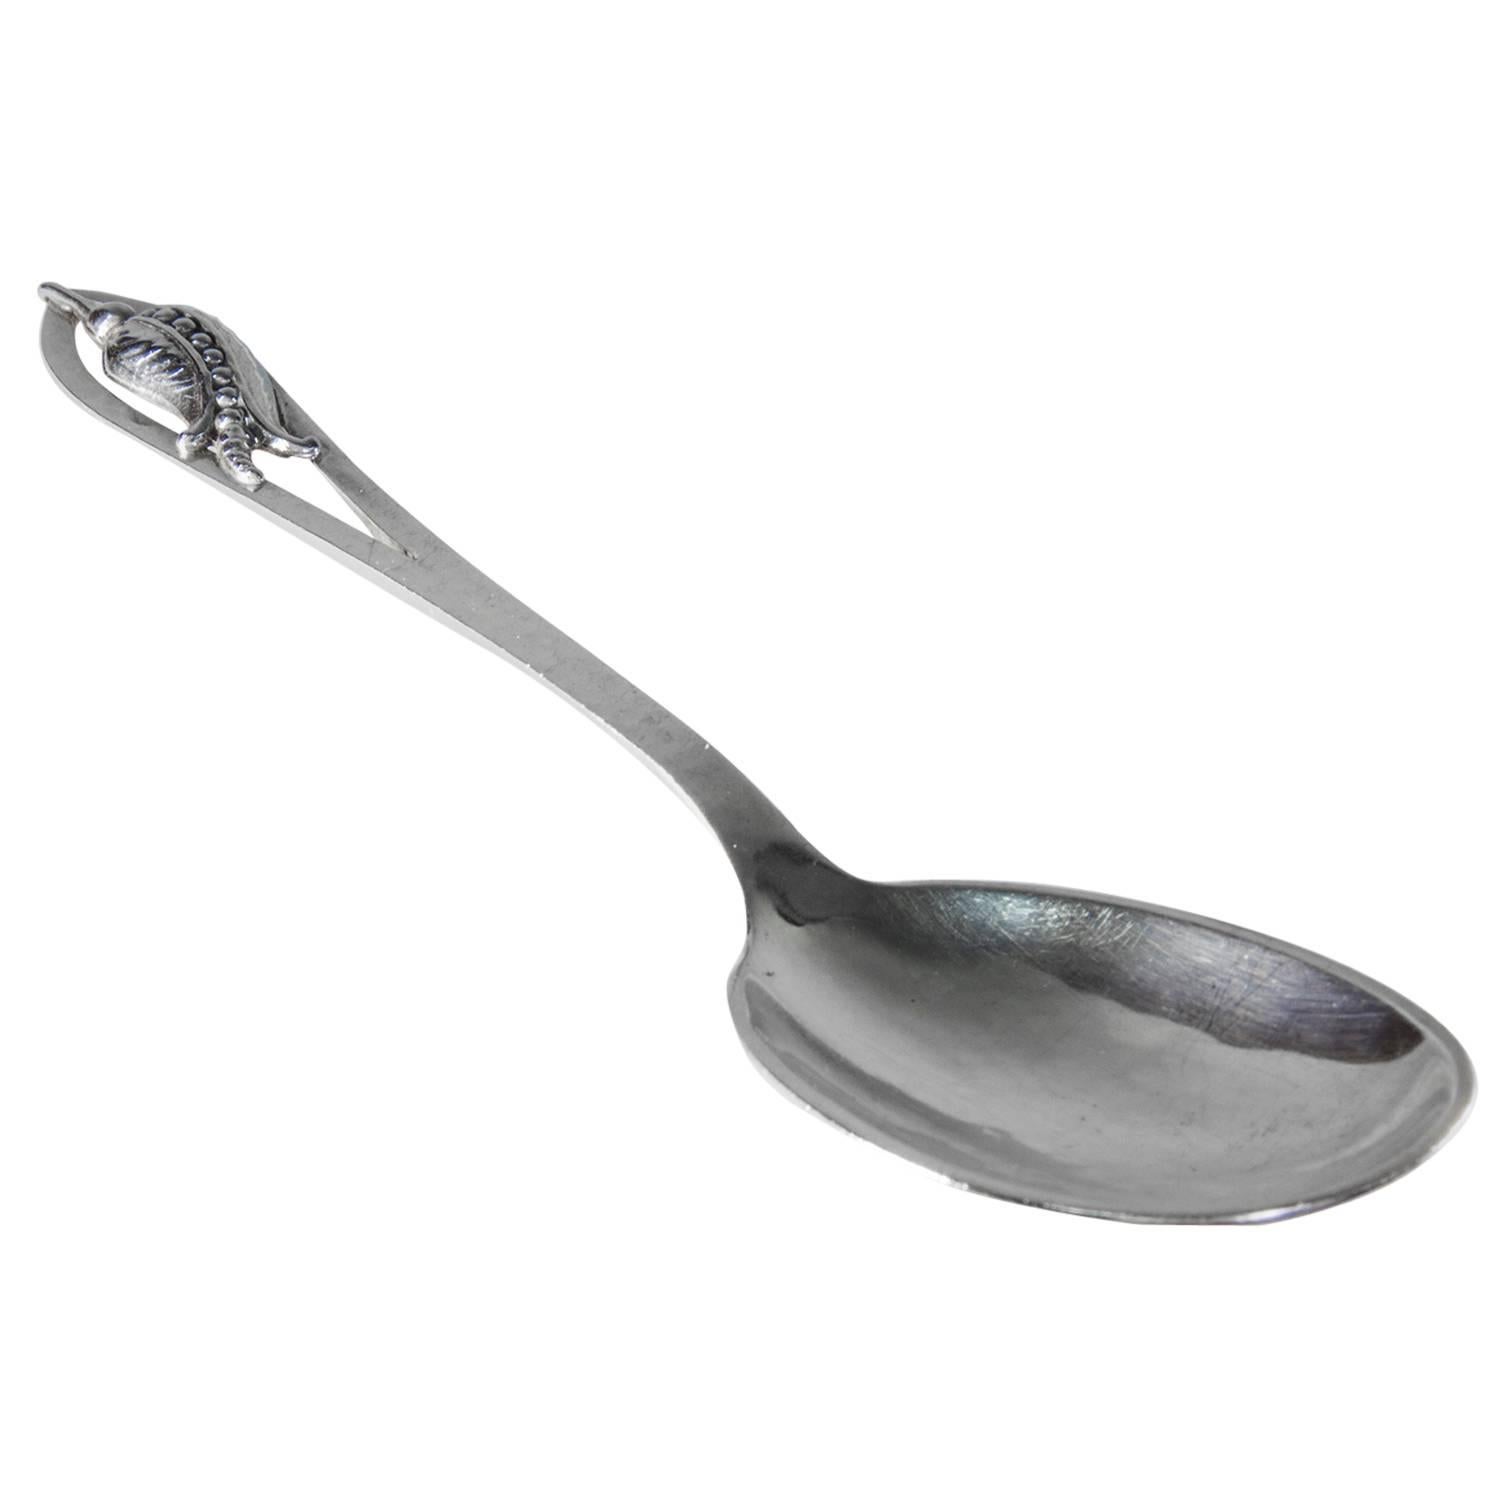 Carl Poul Petersen Silver Sterling Silver Serving Spoon, circa 1960s